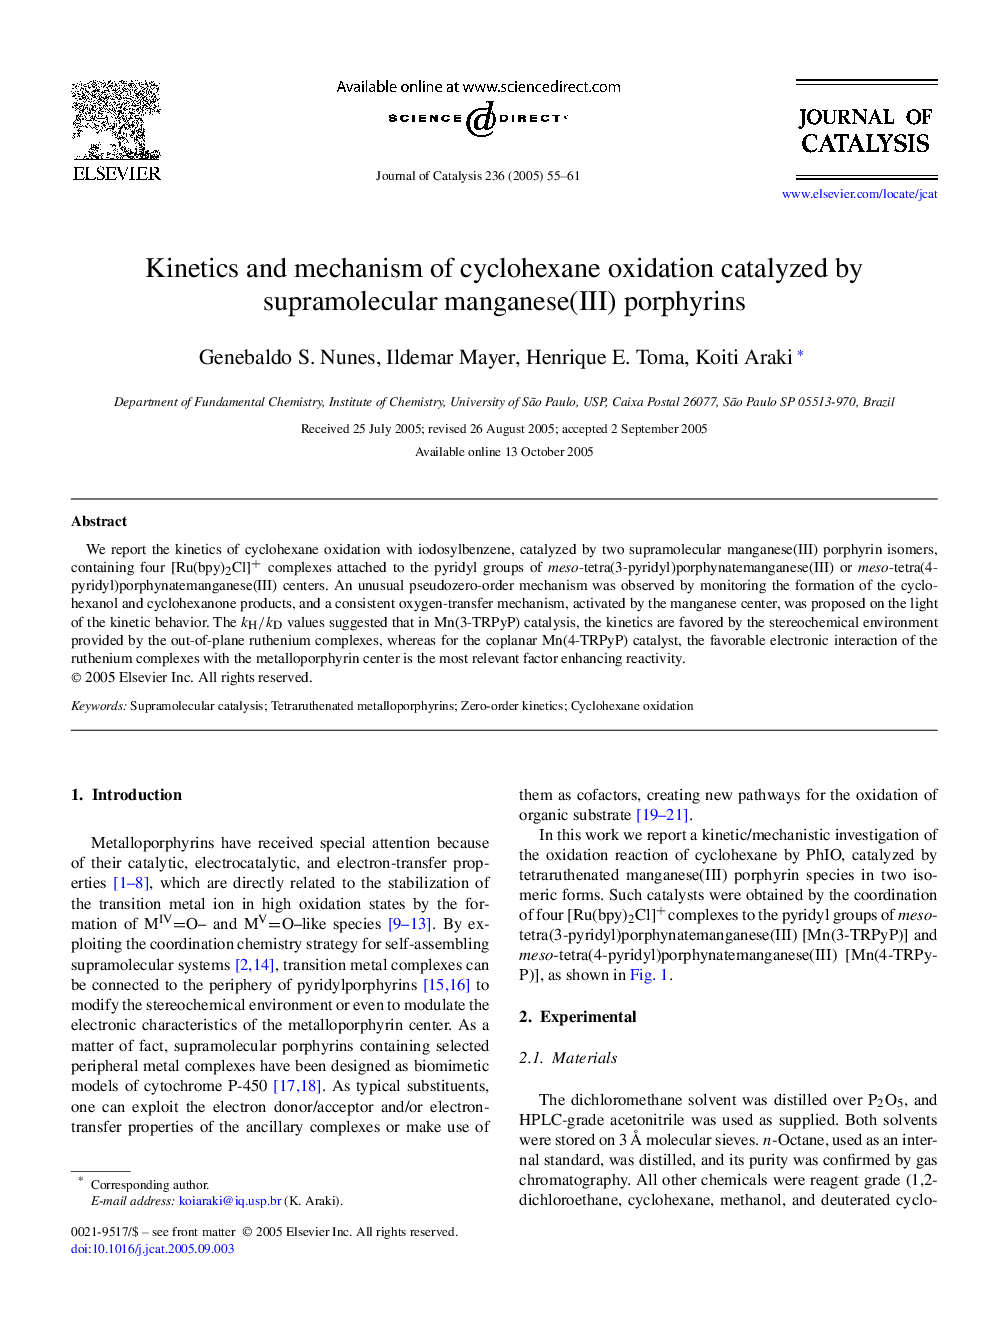 Kinetics and mechanism of cyclohexane oxidation catalyzed by supramolecular manganese(III) porphyrins